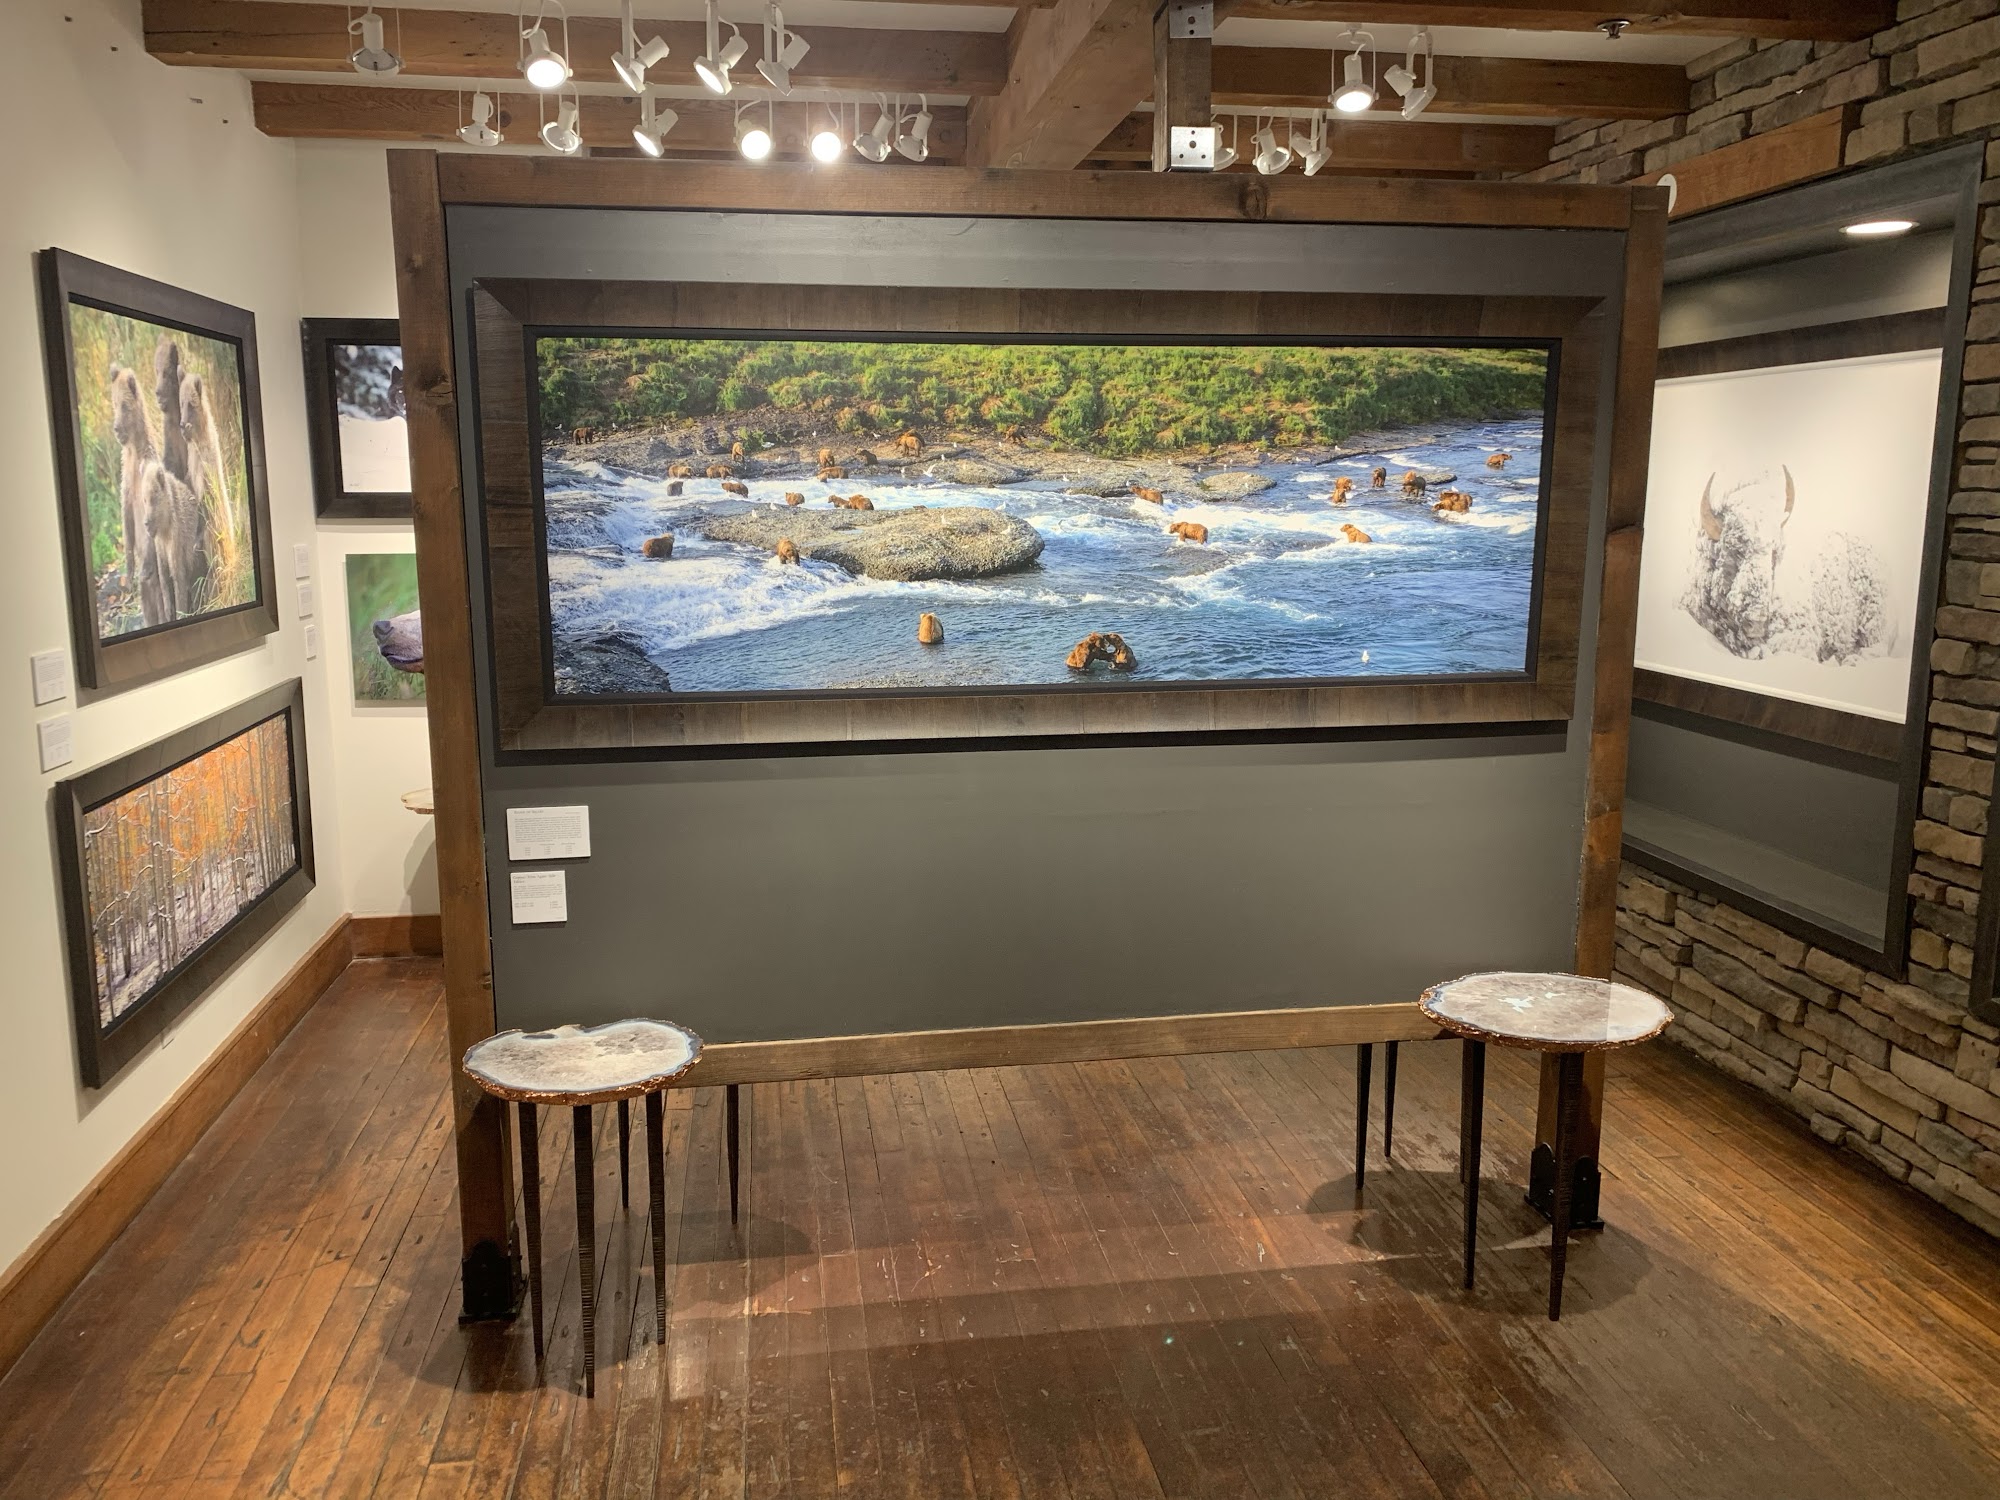 Tony Newlin Gallery at Telluride